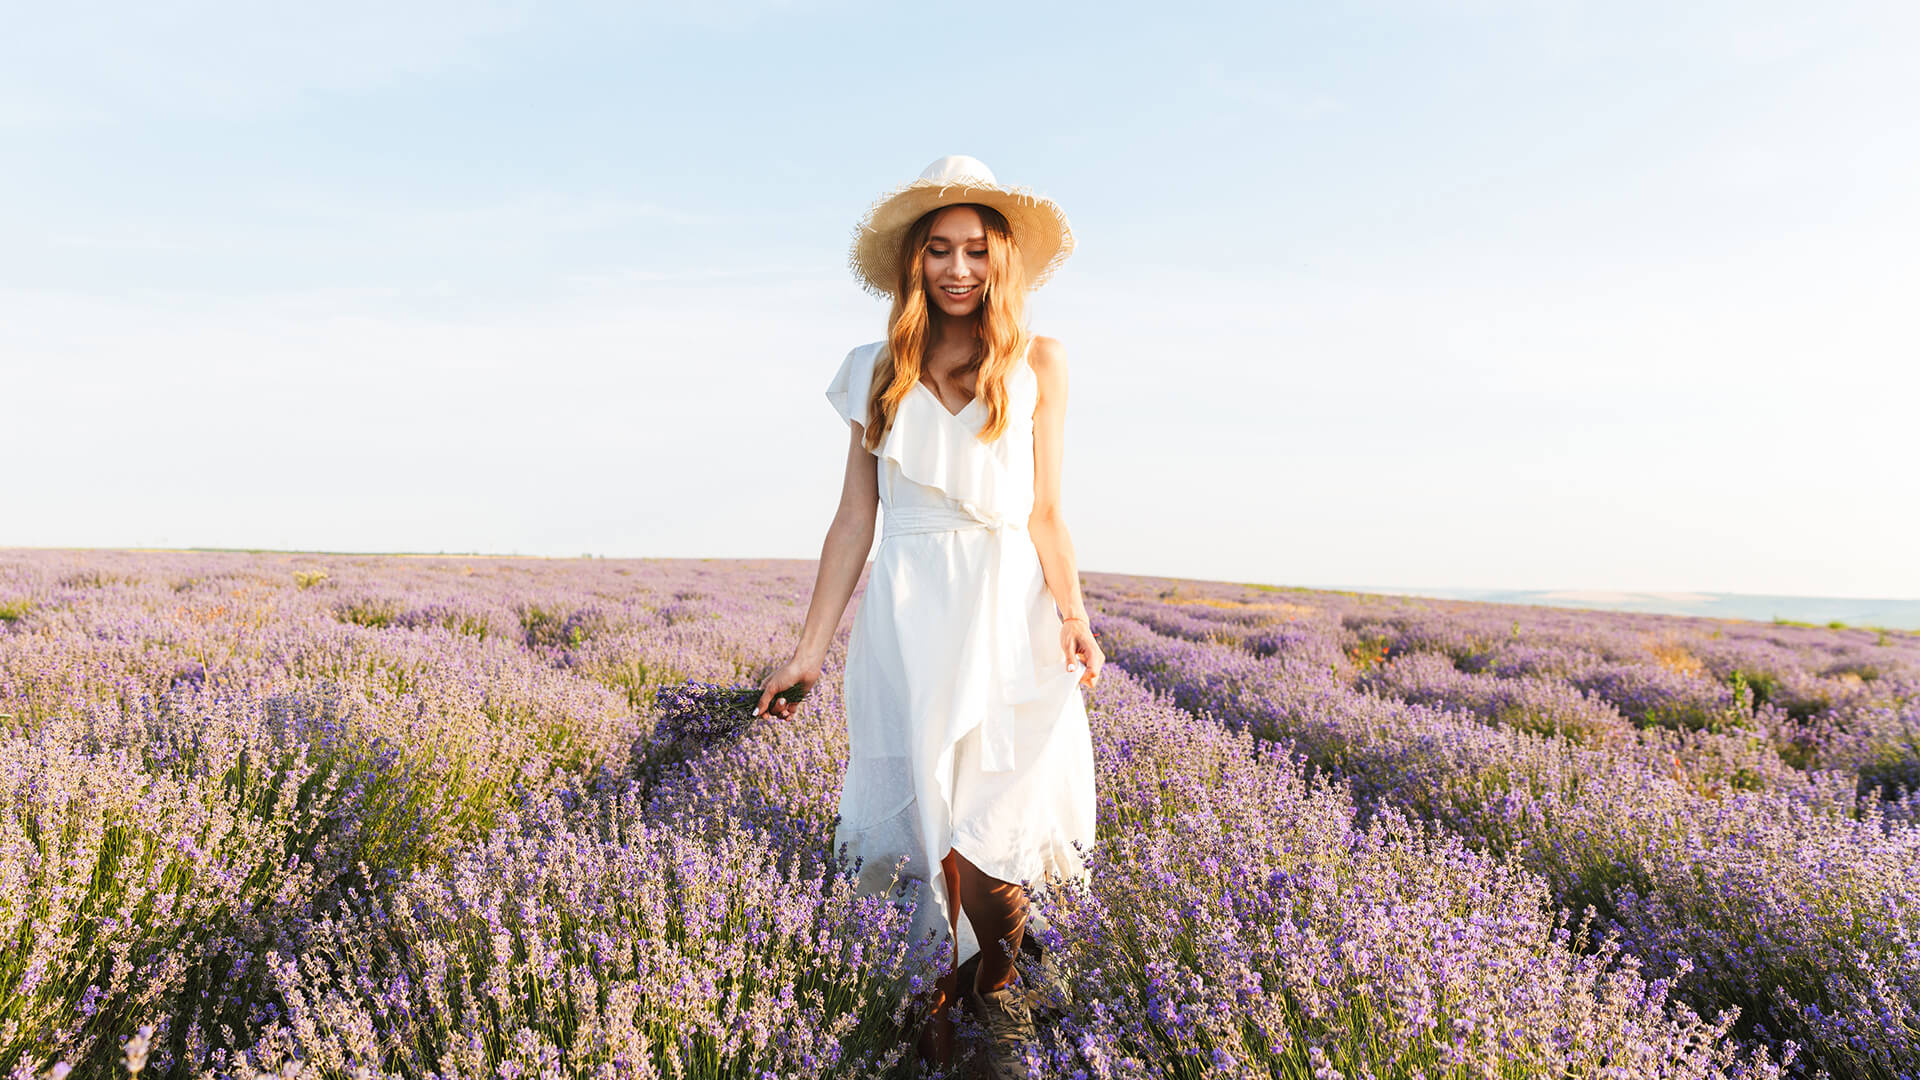 Woman in a white dress walking through a lavender field